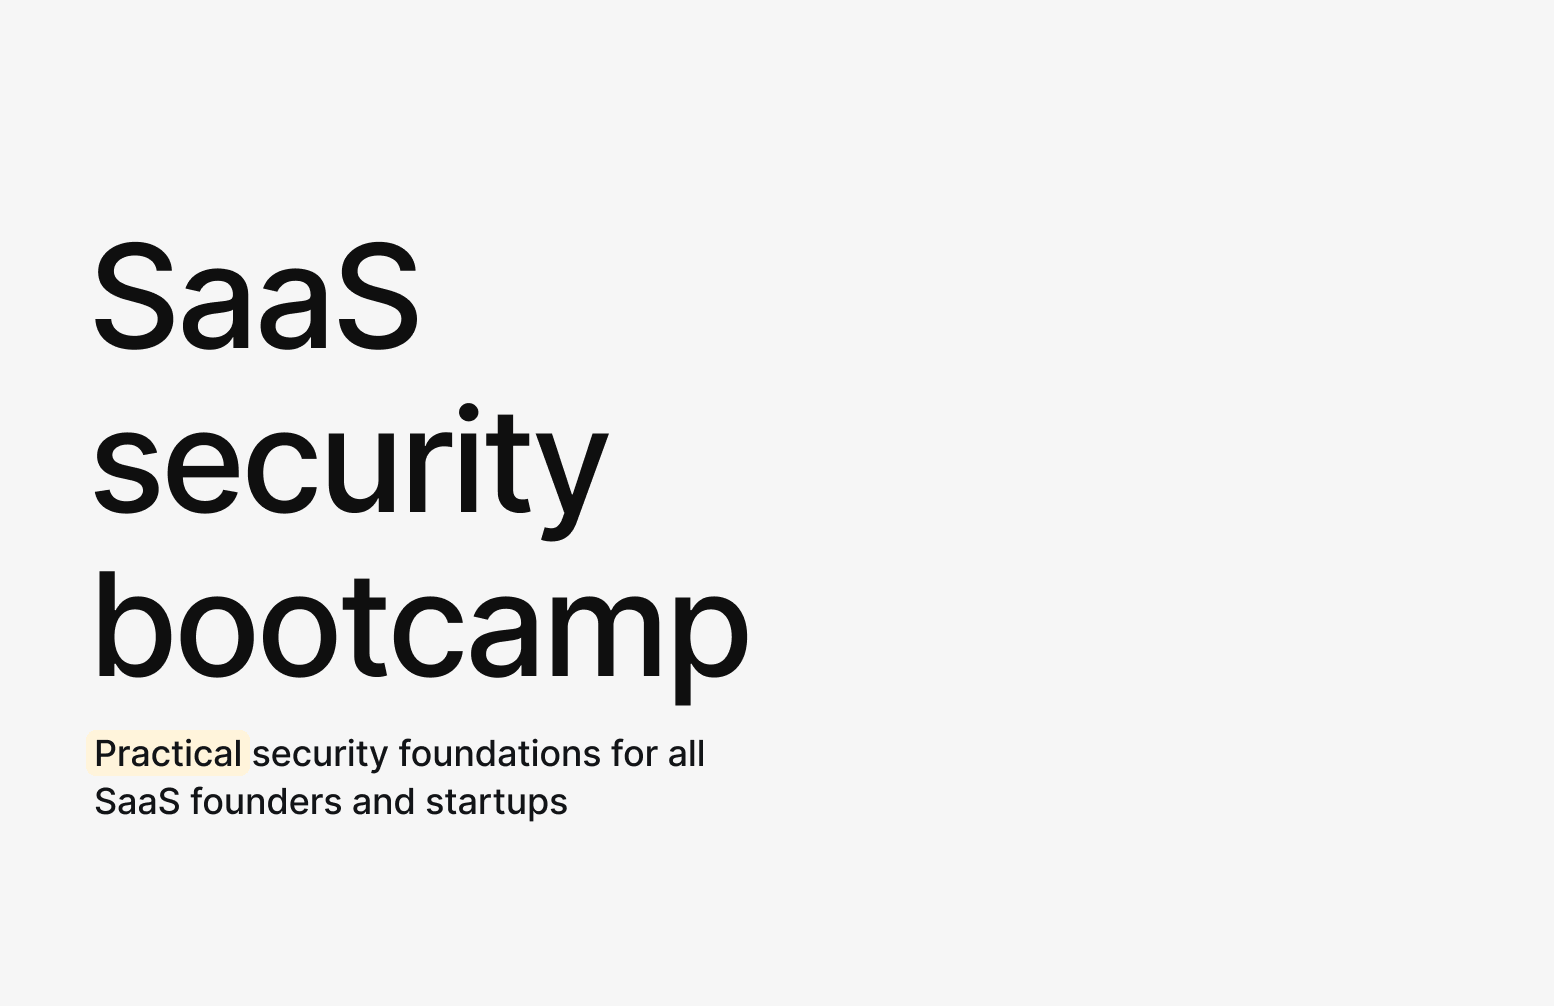 SaaS security bootcamp